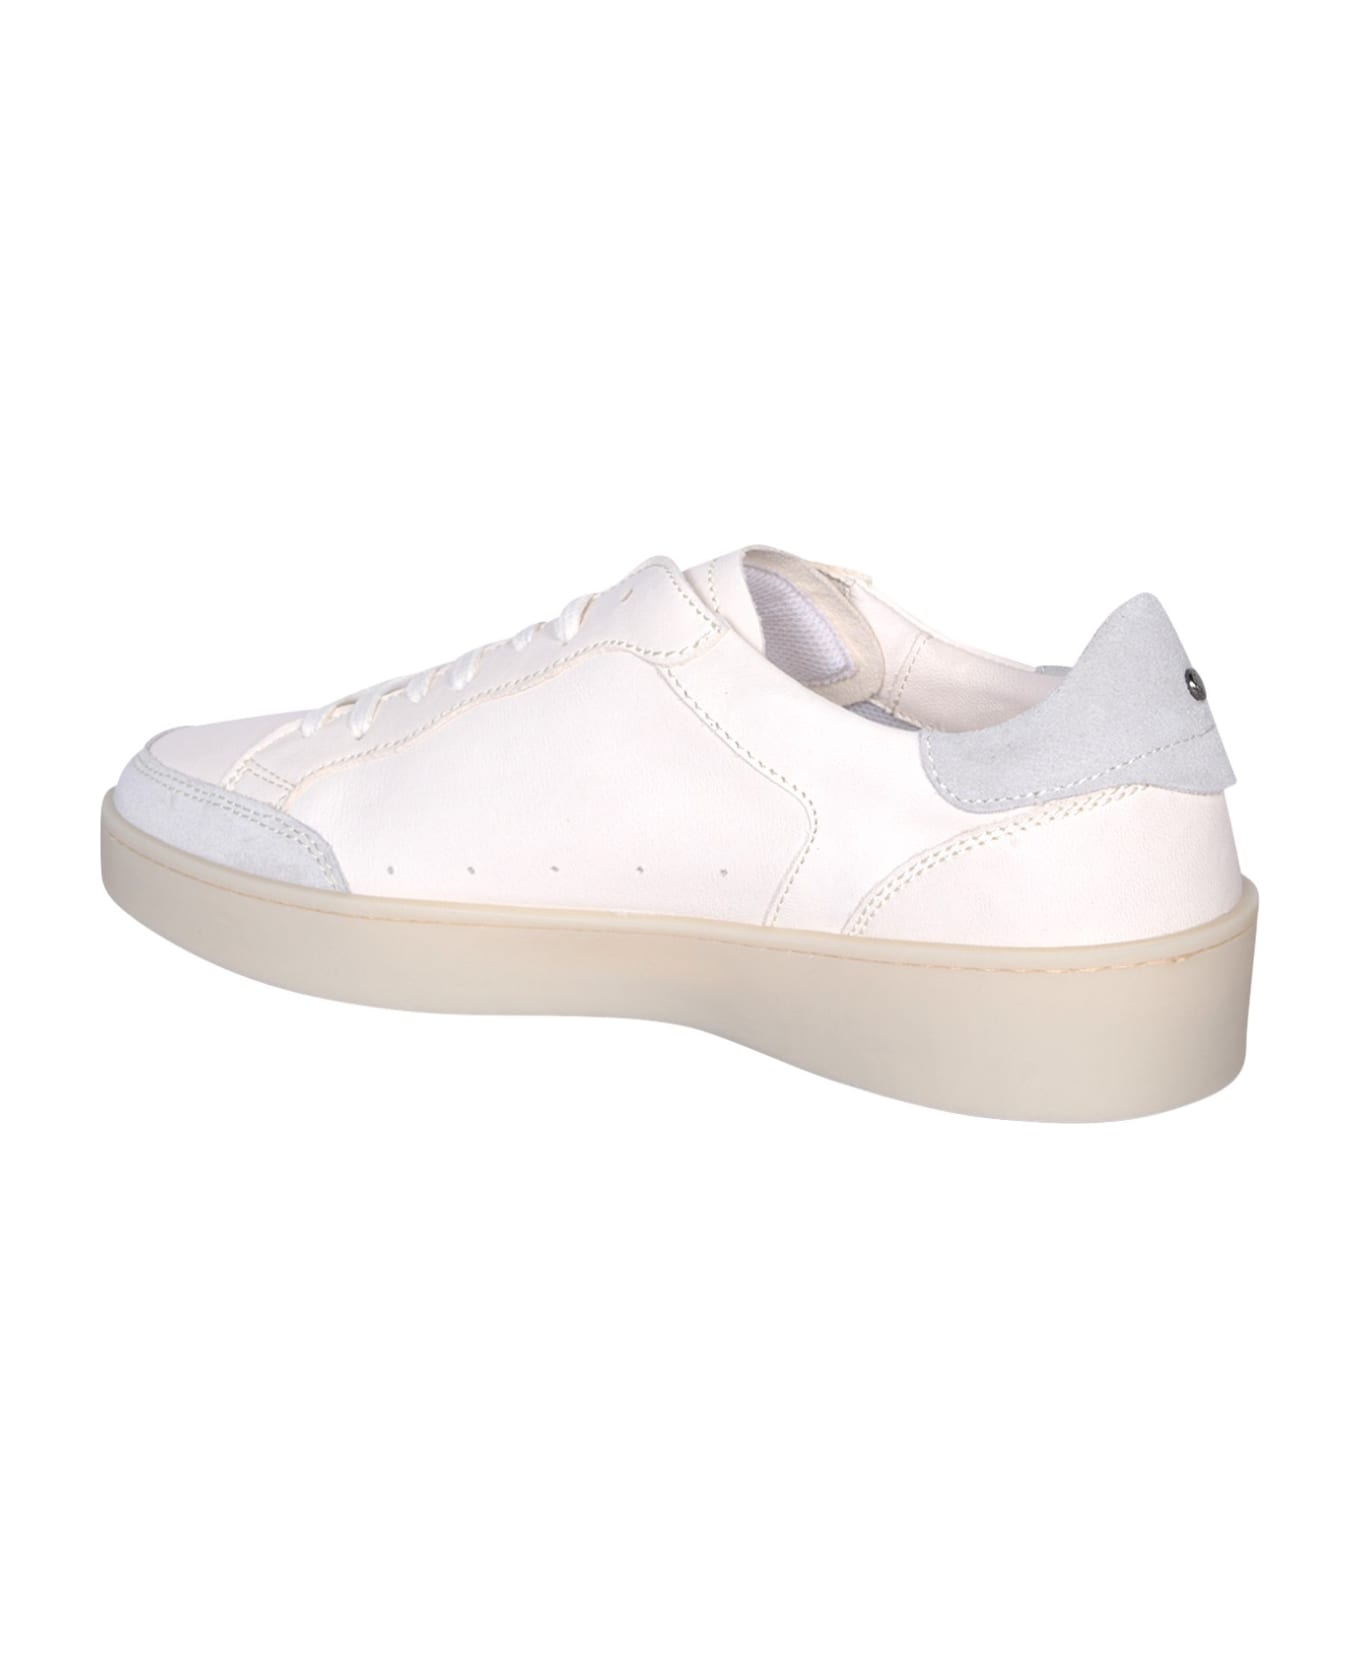 Canali Bi-material White Sneakers - White